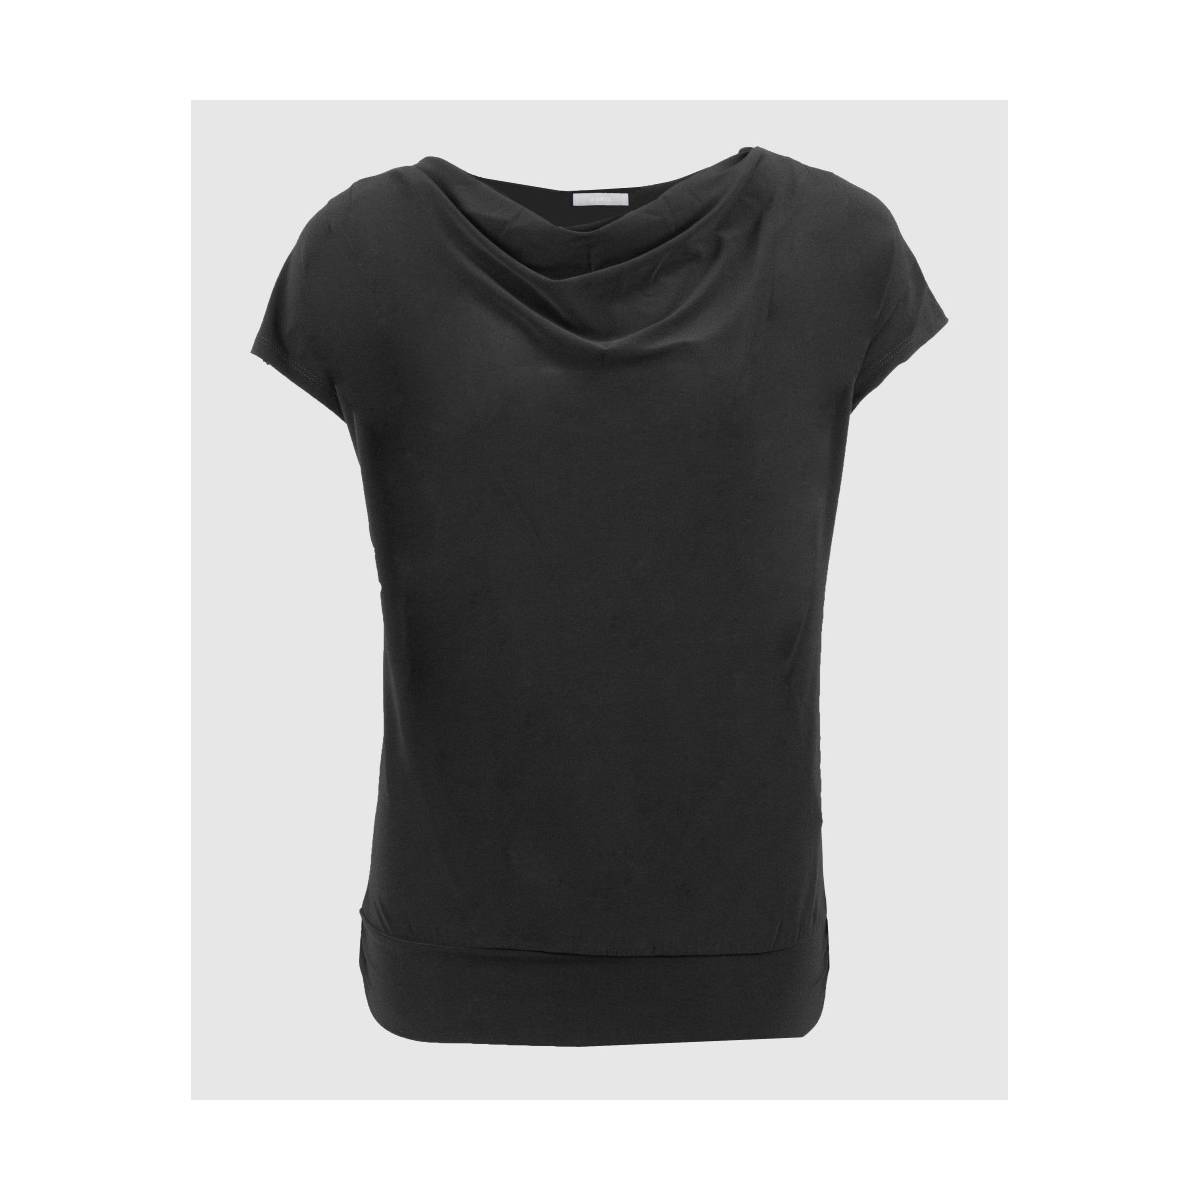 BIANCA  t shirts zwart -  model 6324 - Dameskleding t shirts zwart